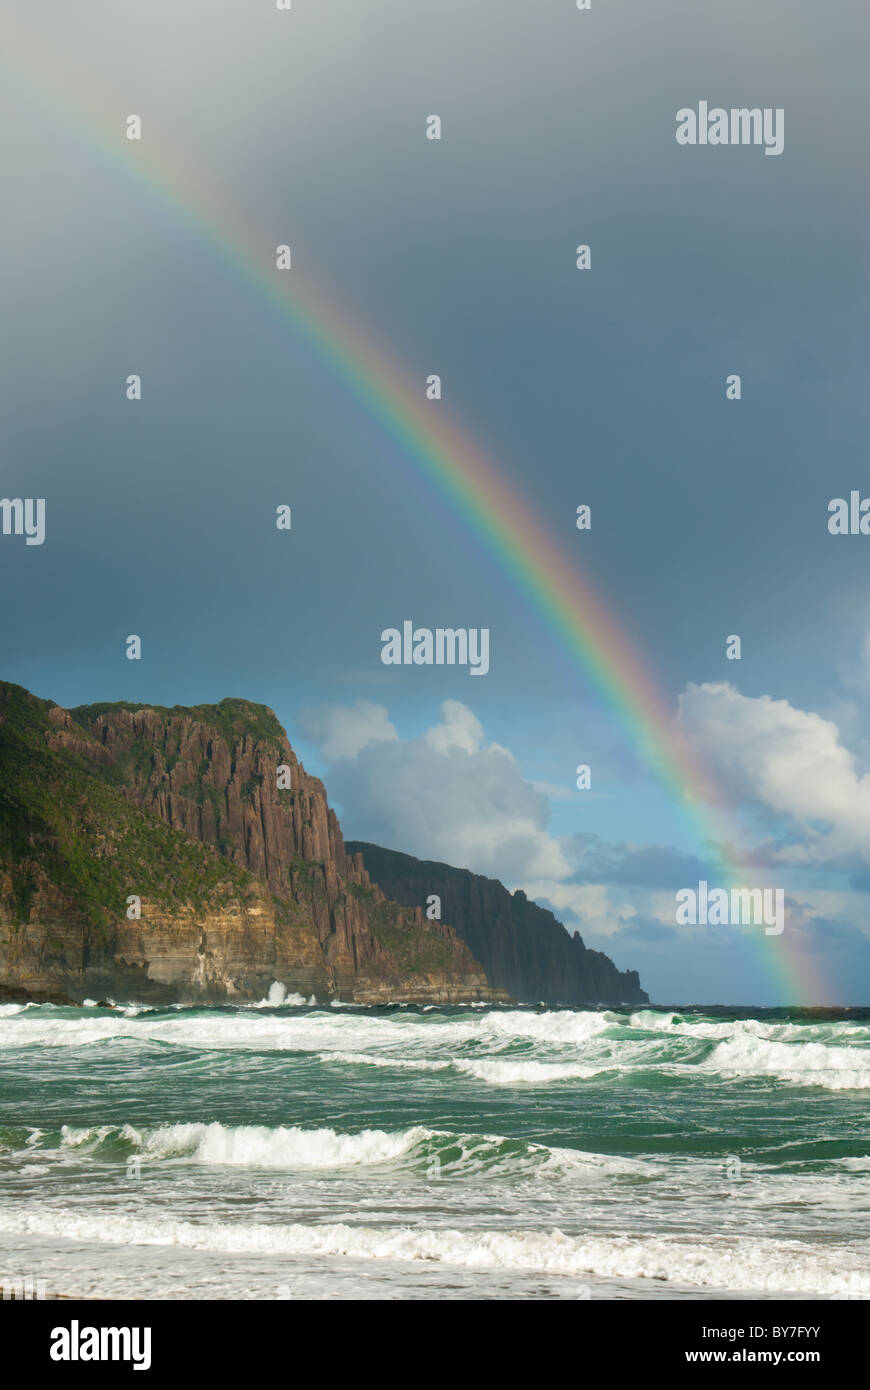 Rainbow after hailstorm over coastal cliffs Stock Photo